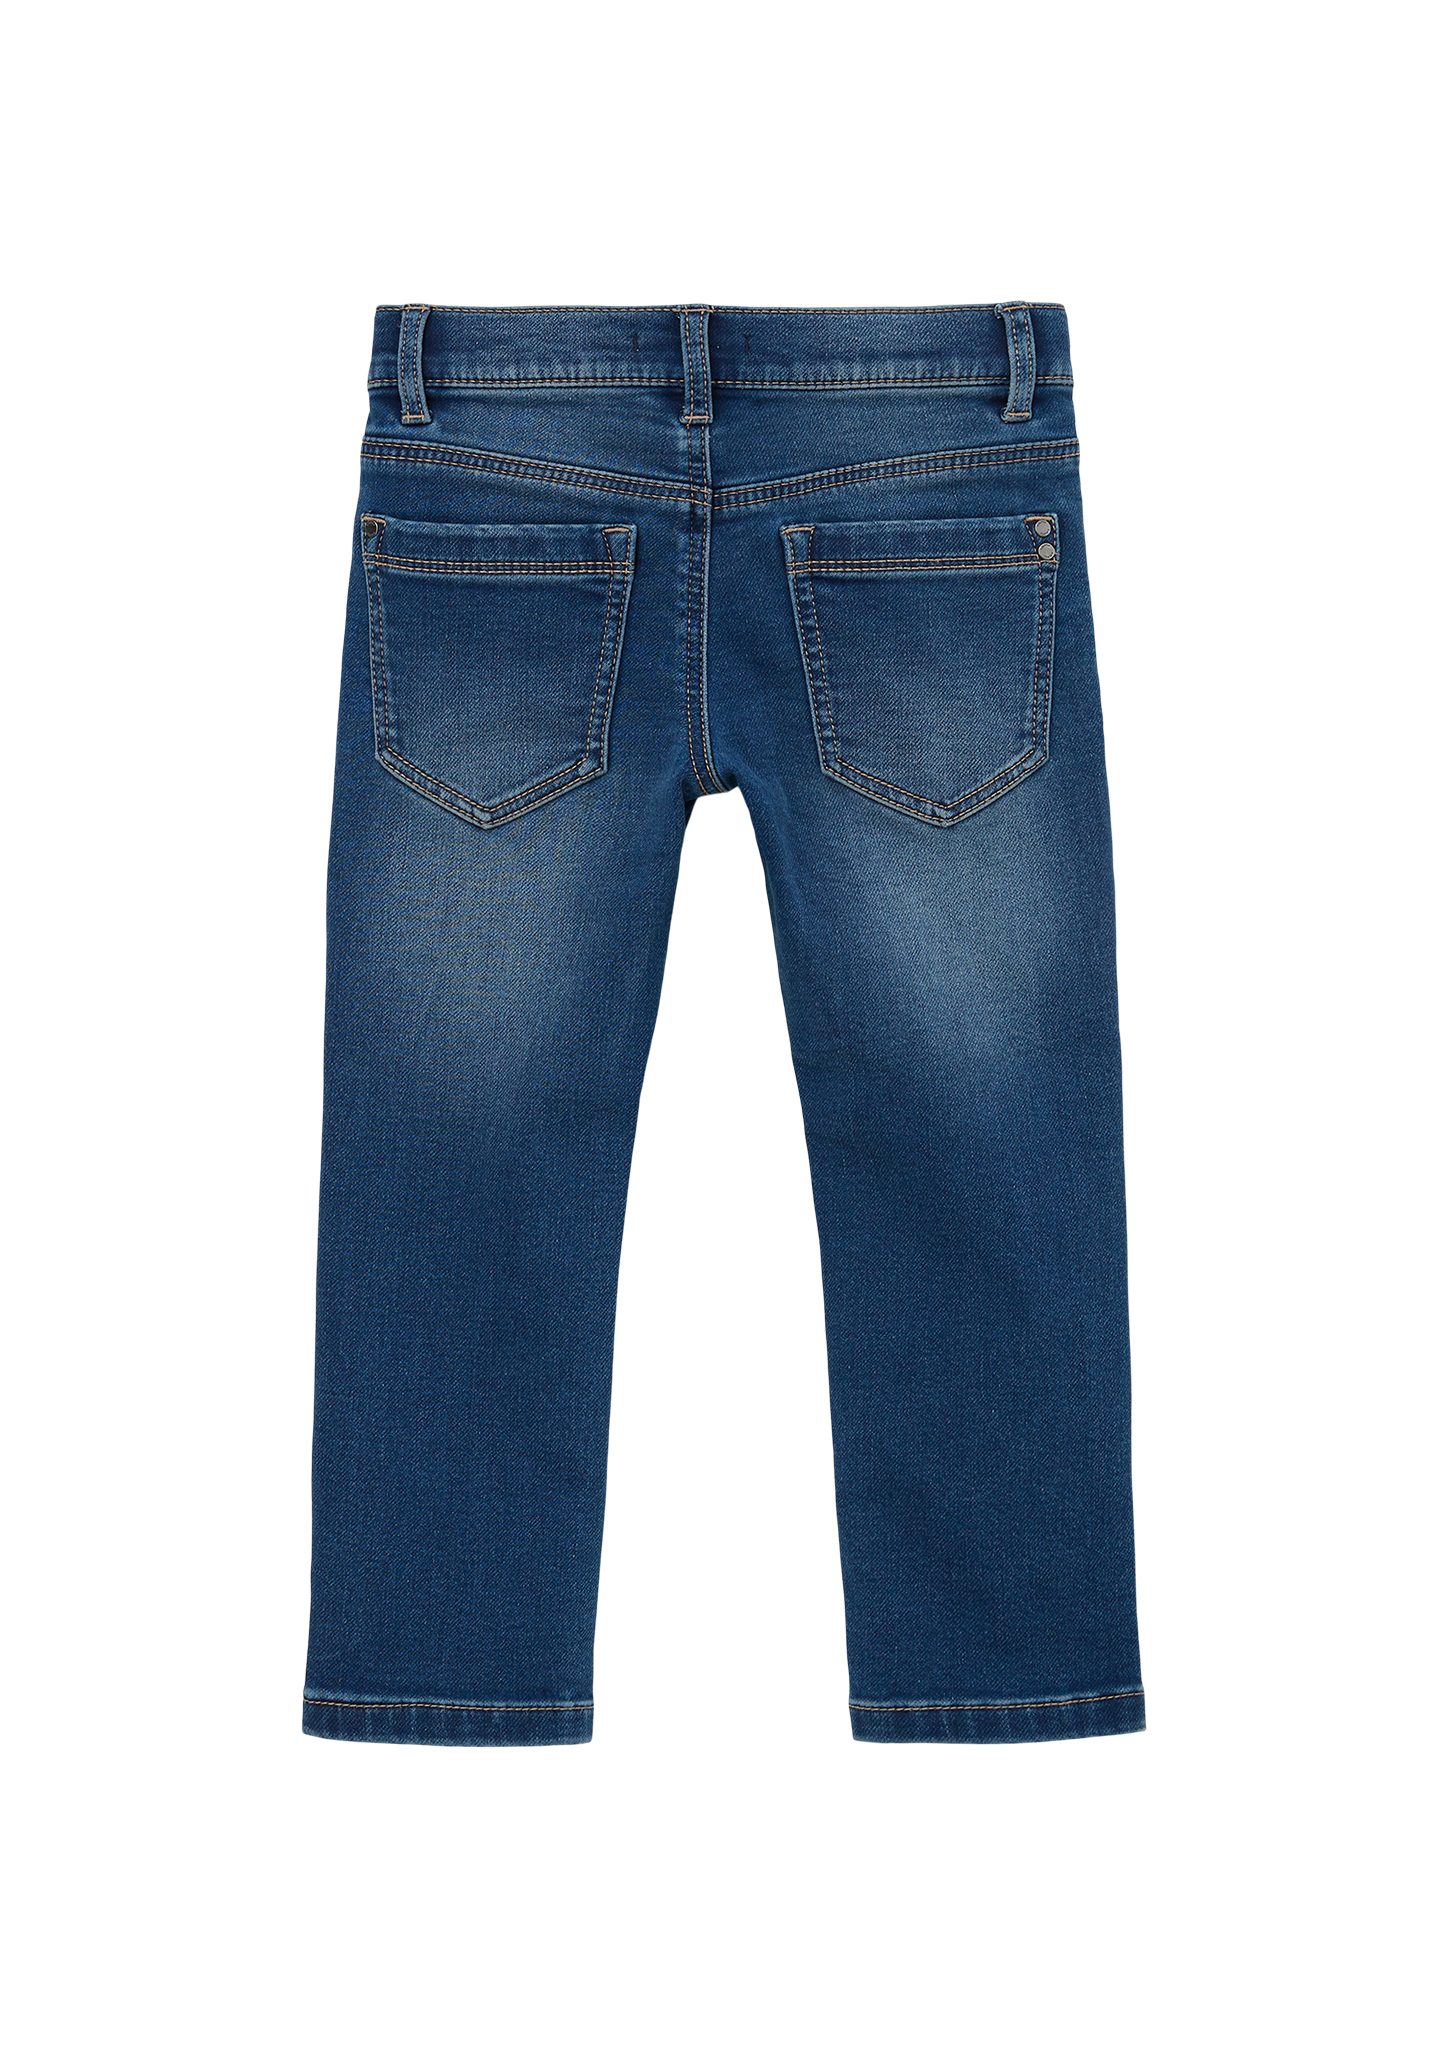 / Brad Rise s.Oliver / Leg Stickerei, / 5-Pocket-Jeans Mid Fit Waschung Slim Slim Jeans